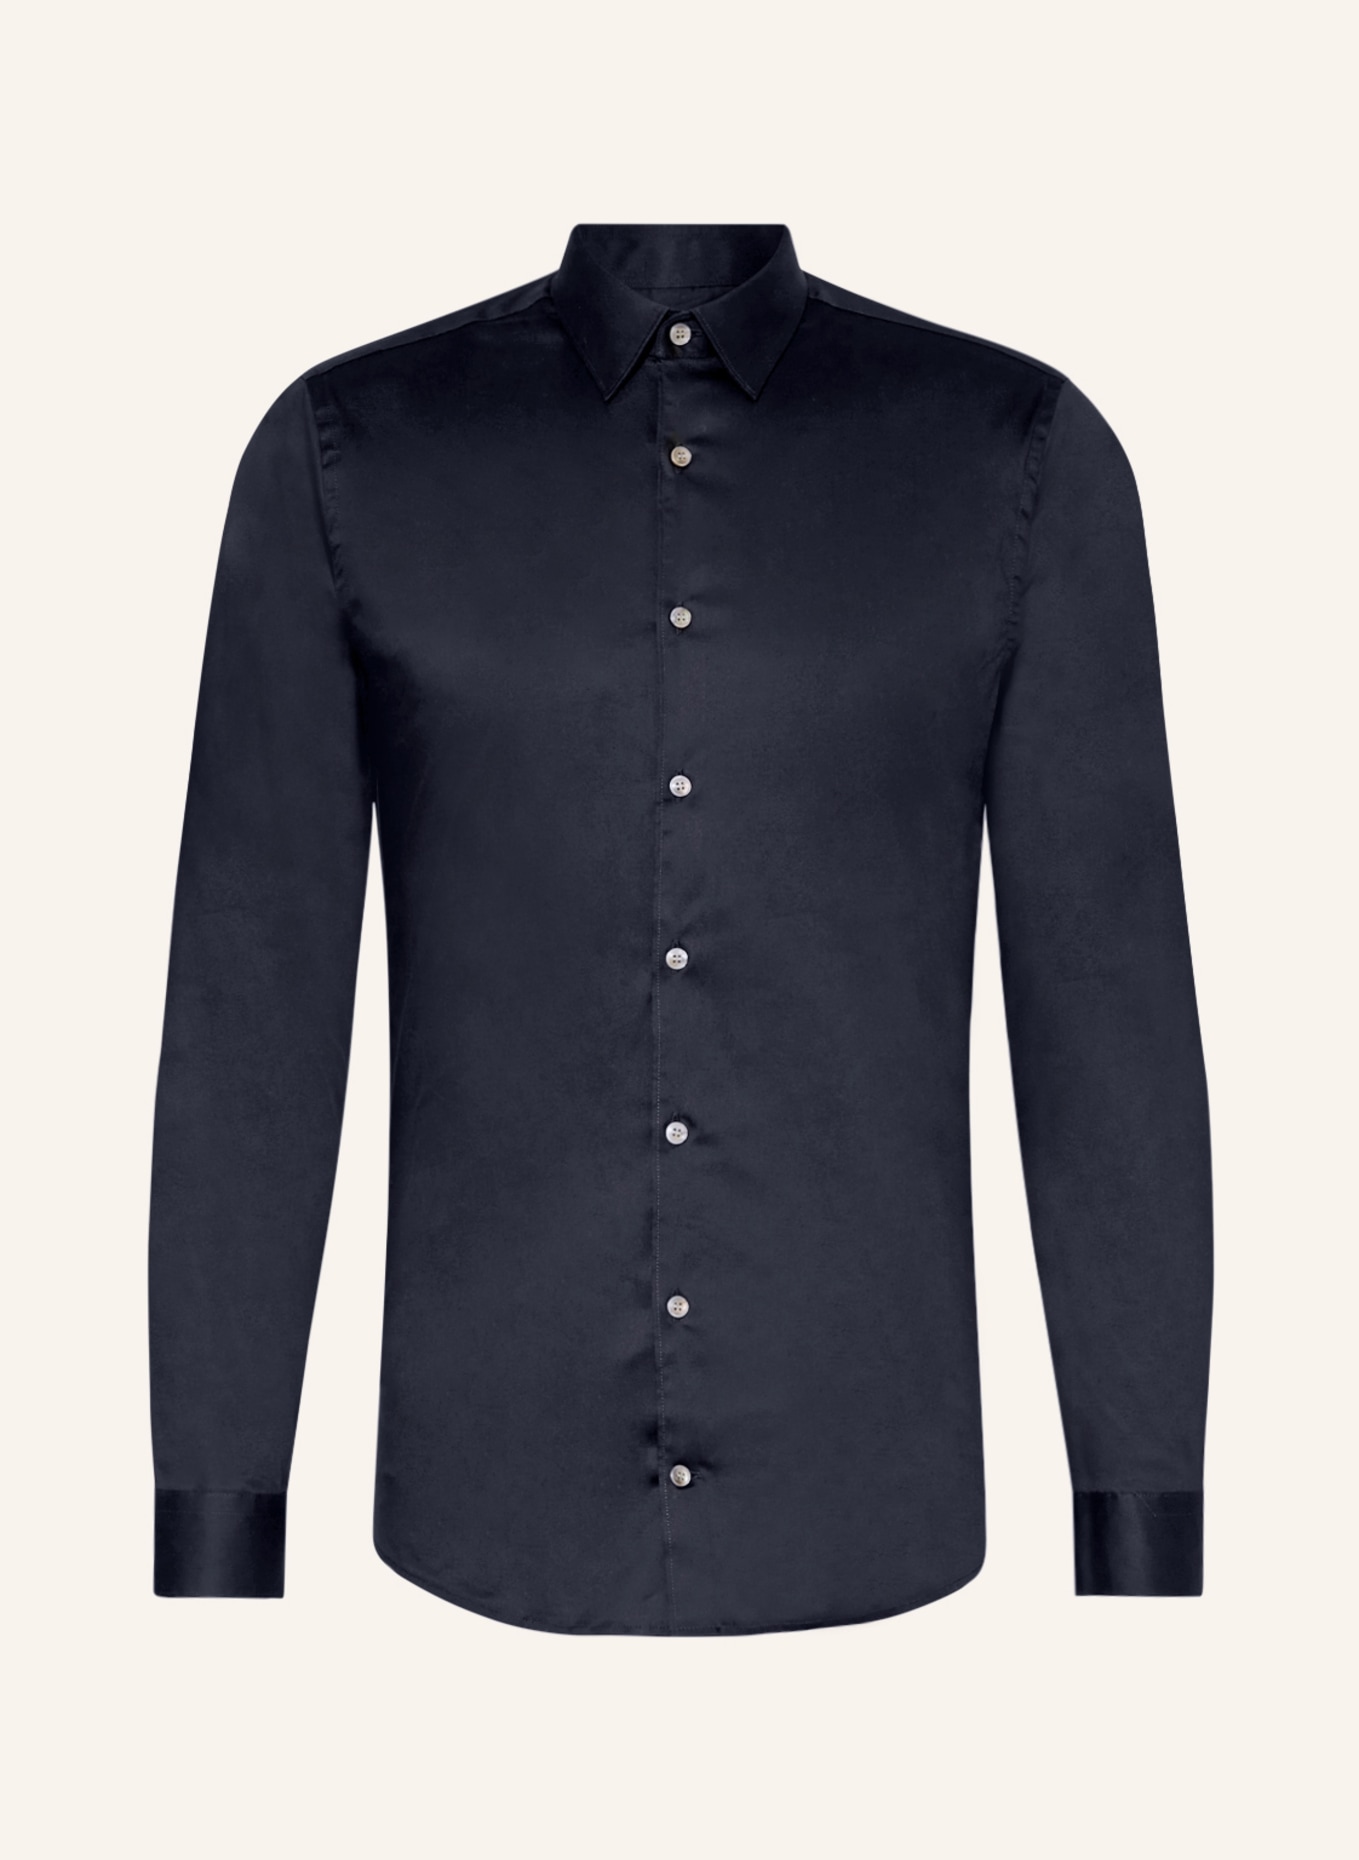 Рубашка TIGER OF SWEDEN FILBRODIE Extra Slim Fit, темно-синий